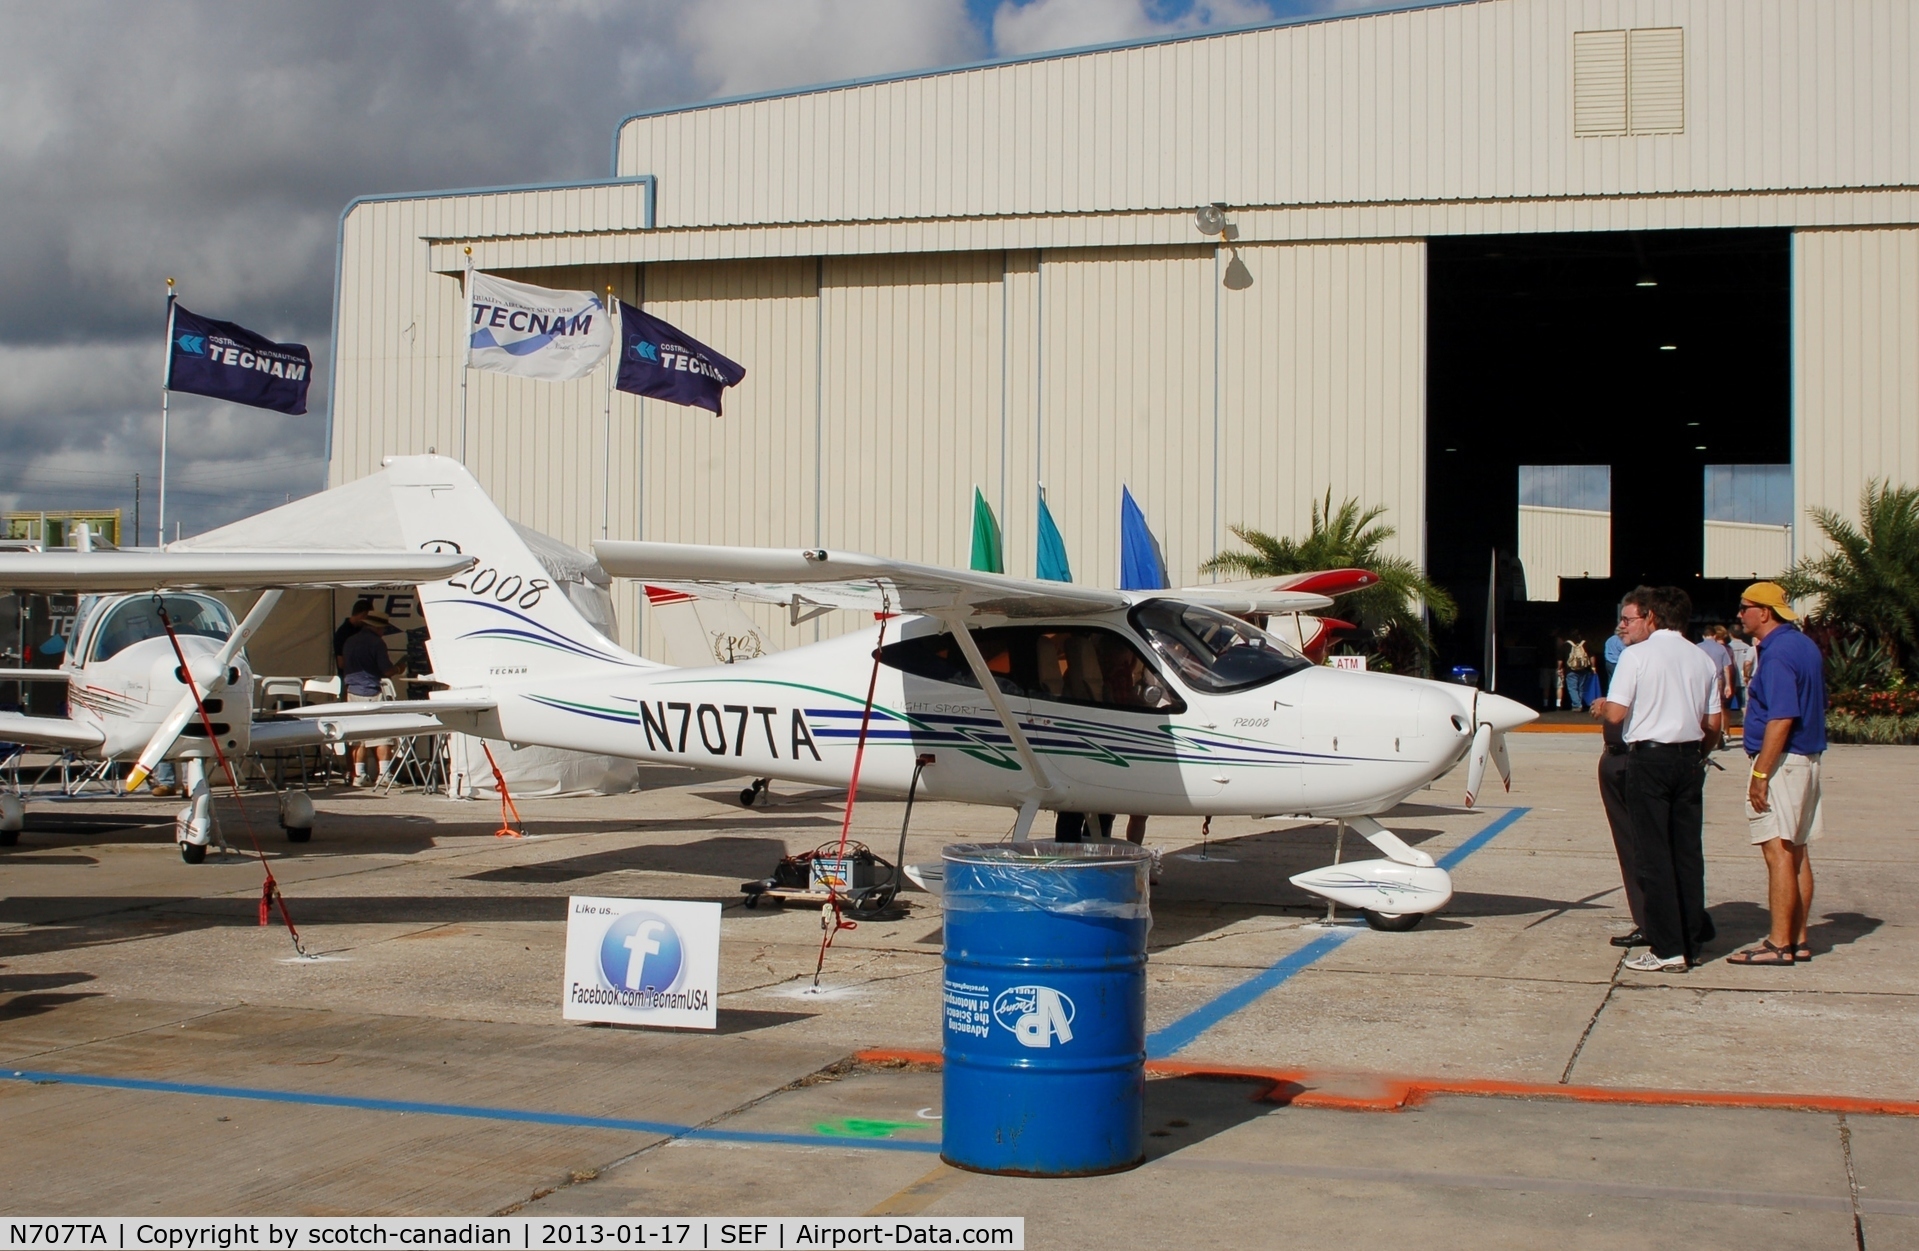 N707TA, Tecnam P-2008 C/N 009, Costruzioni Aeronautiche Tecna P2008, N707TA, at the US Sport Aviation Expo, Sebring Regional Airport, Sebring, FL